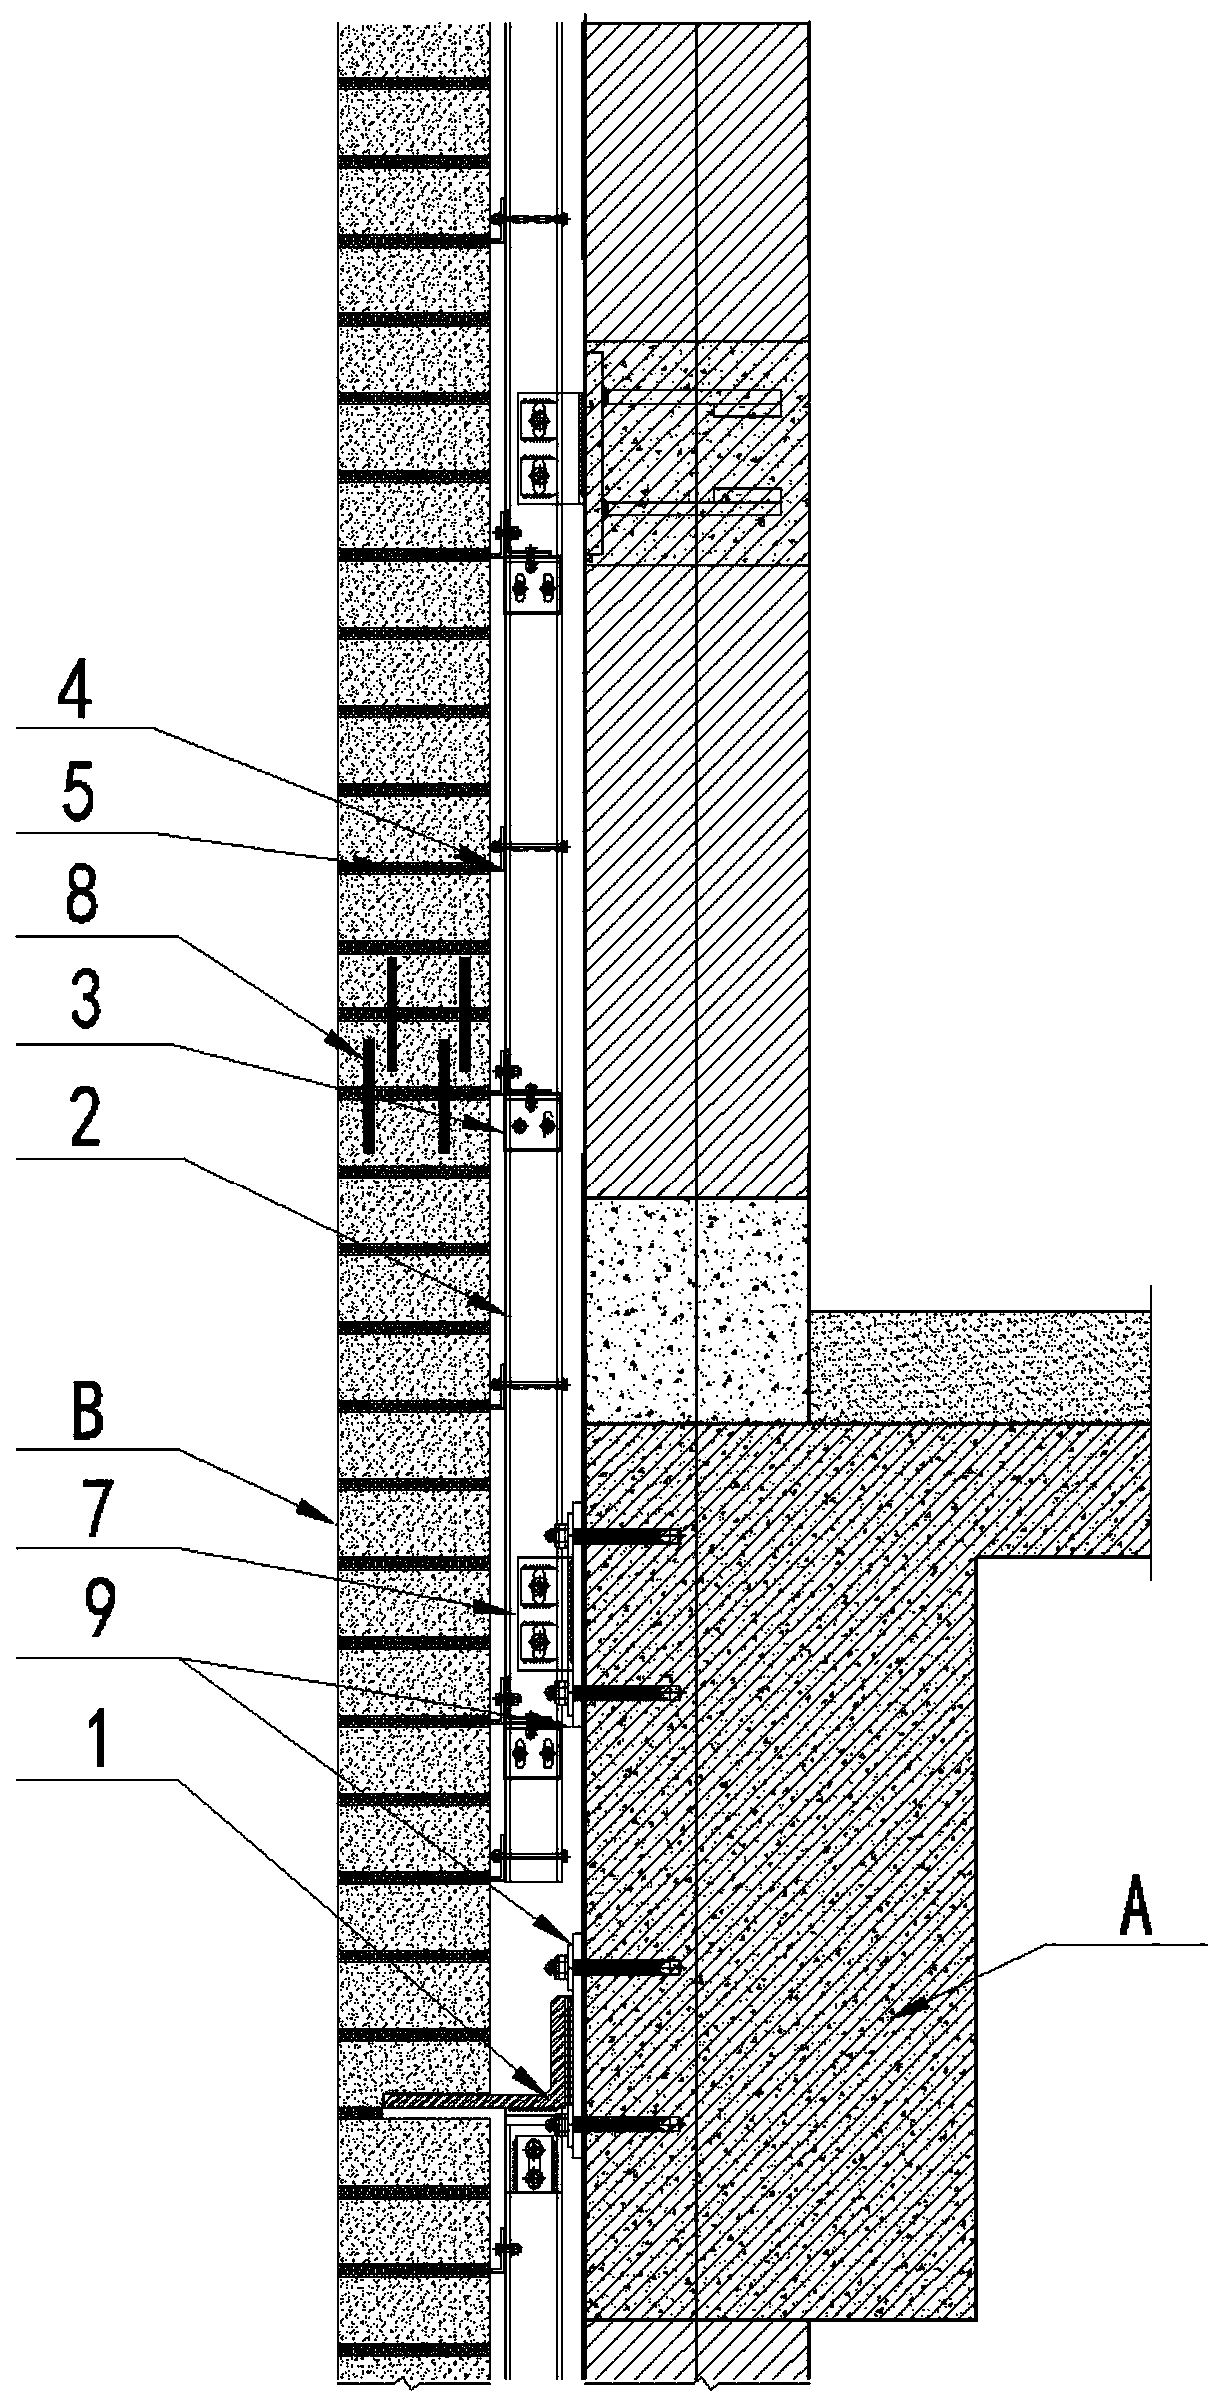 Construction method of metal framework system arranged on curtain wall built by ganged bricks